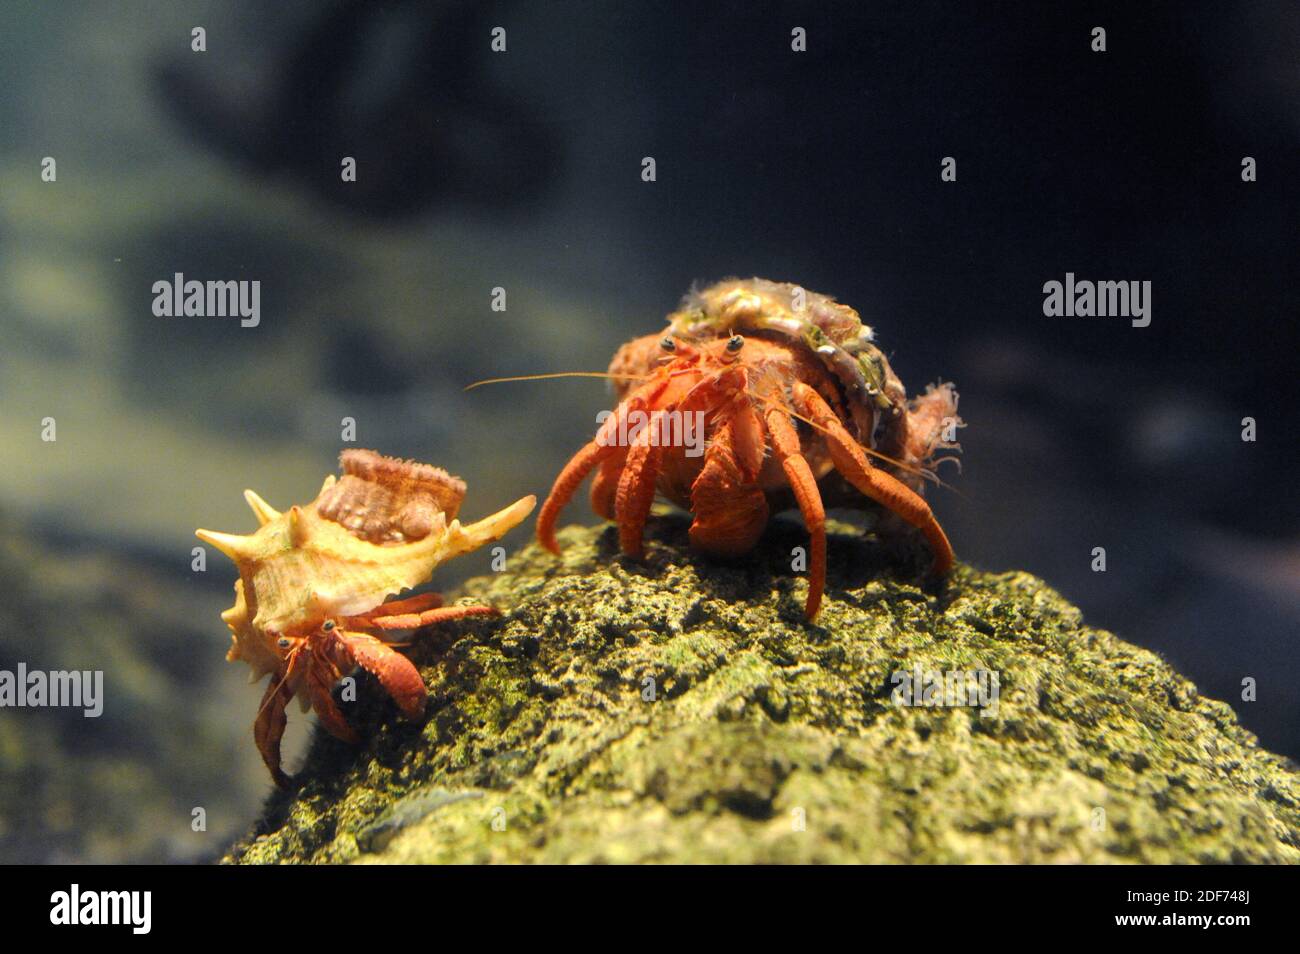 Mediterranean hermit crab (Dardanus arrosor) is a marine crustacean predator and scavenger. Stock Photo